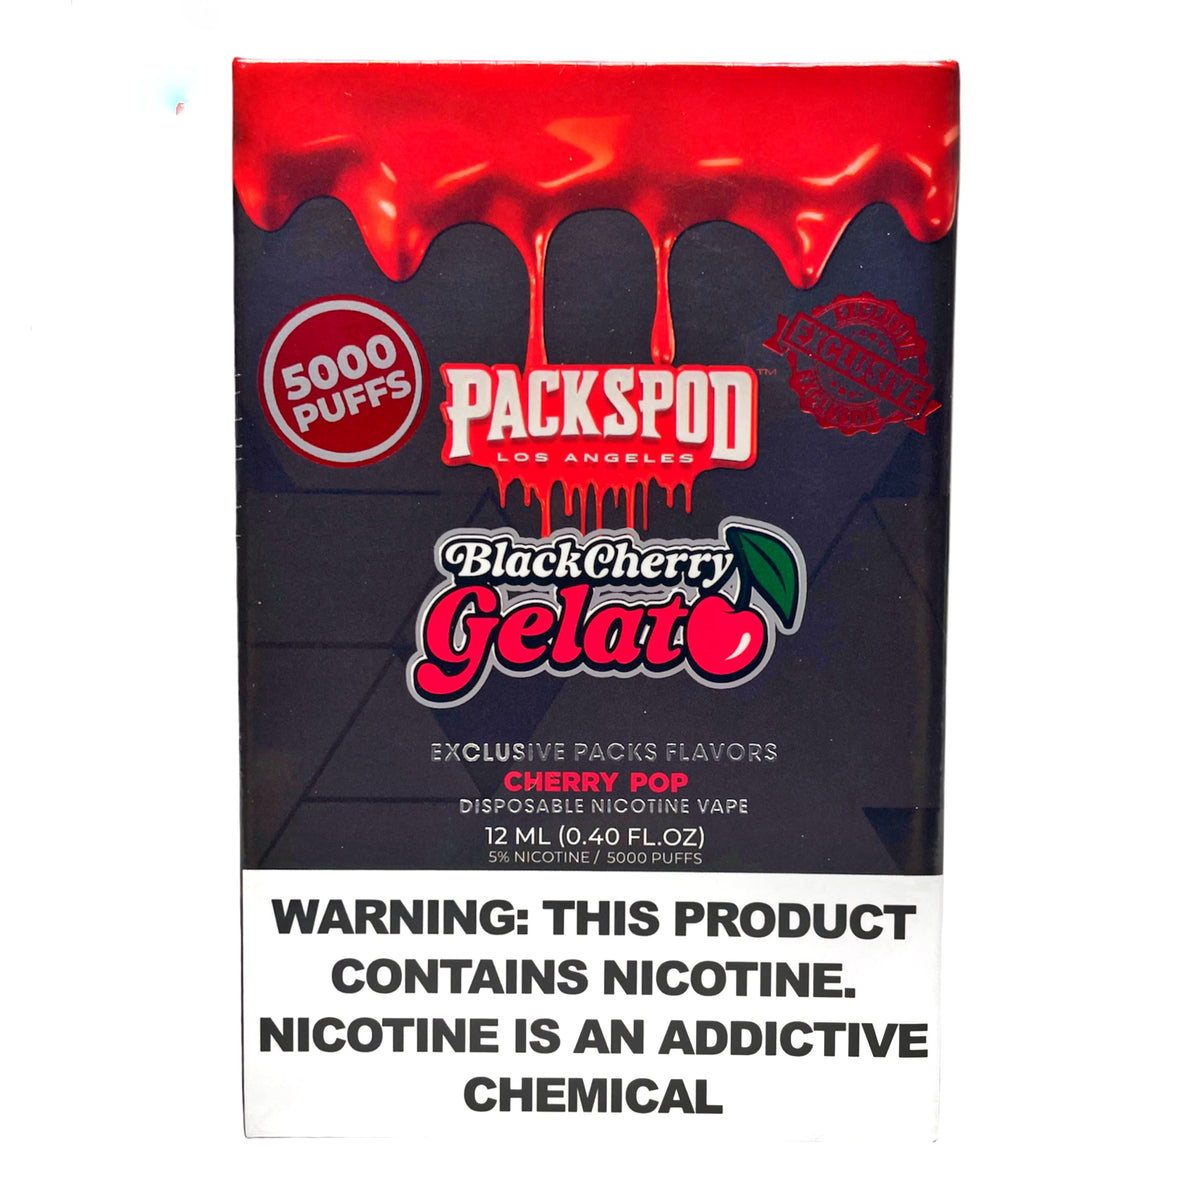     PackSpod Black Cherry Gelato Flavor